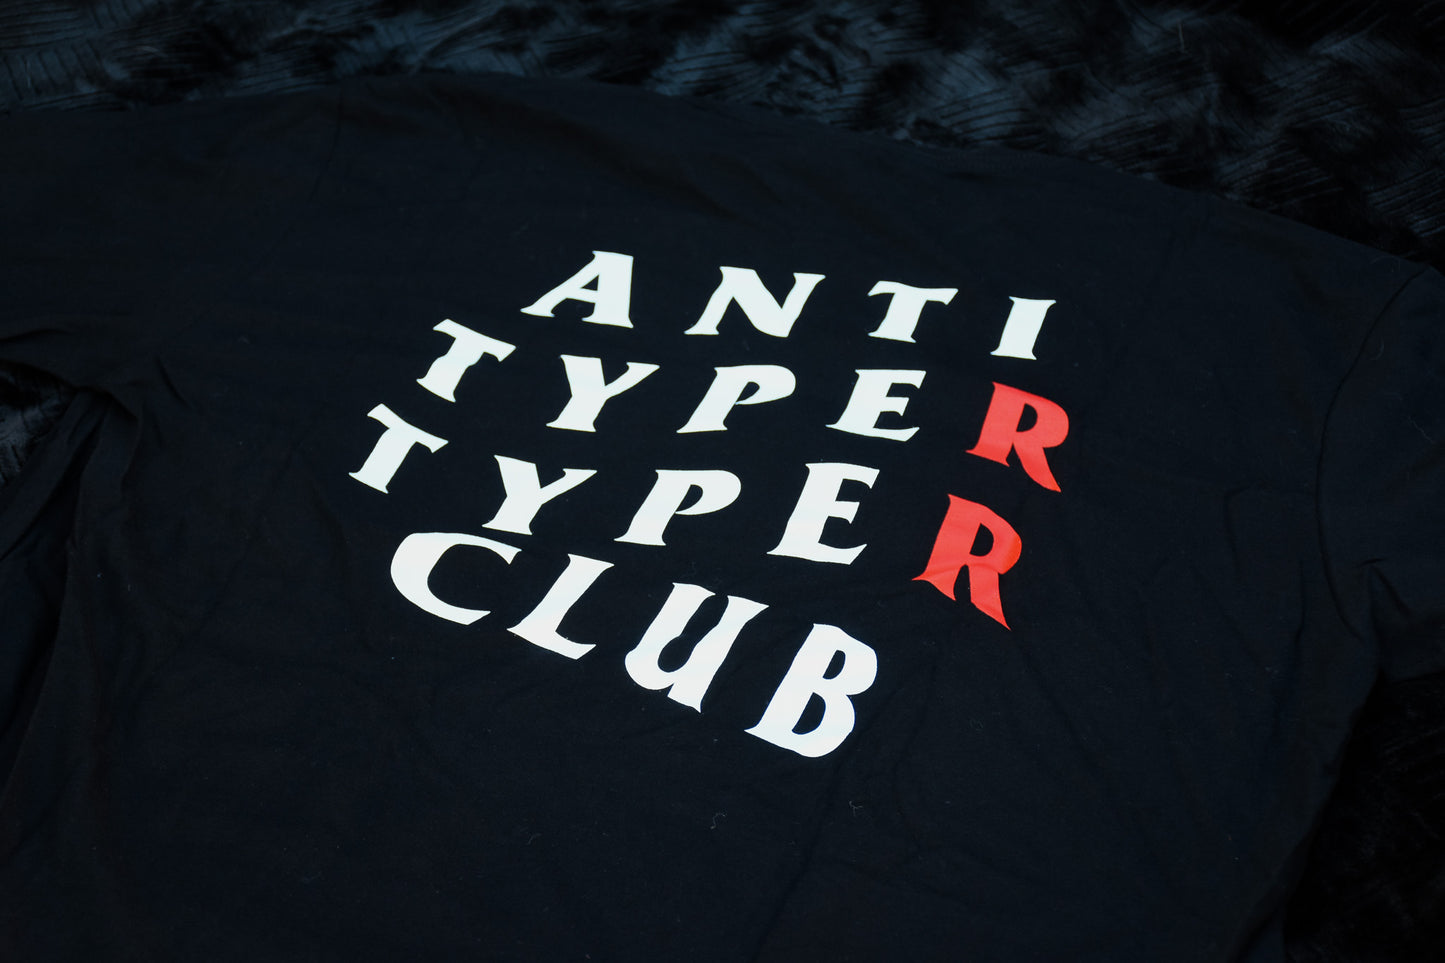 ANTI TYPE R TYPE R CLUB SHIRT